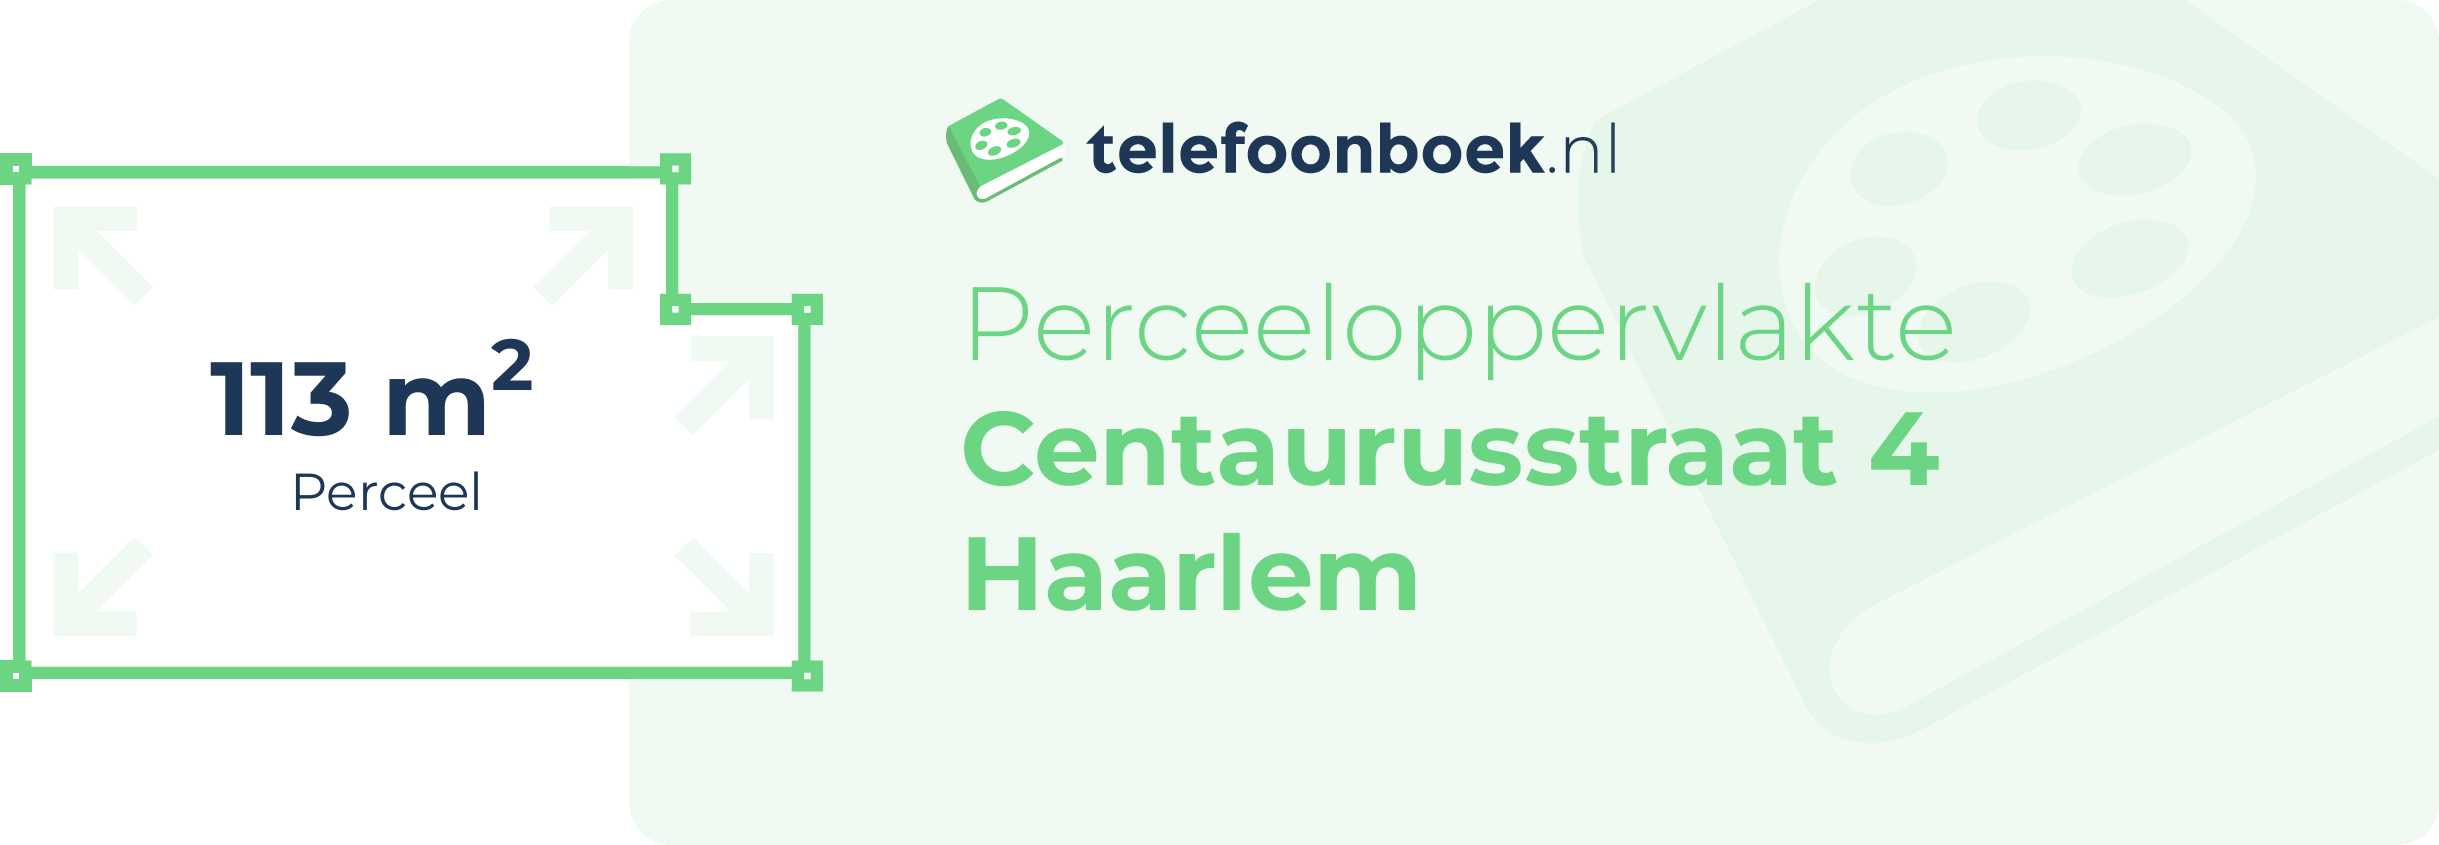 Perceeloppervlakte Centaurusstraat 4 Haarlem